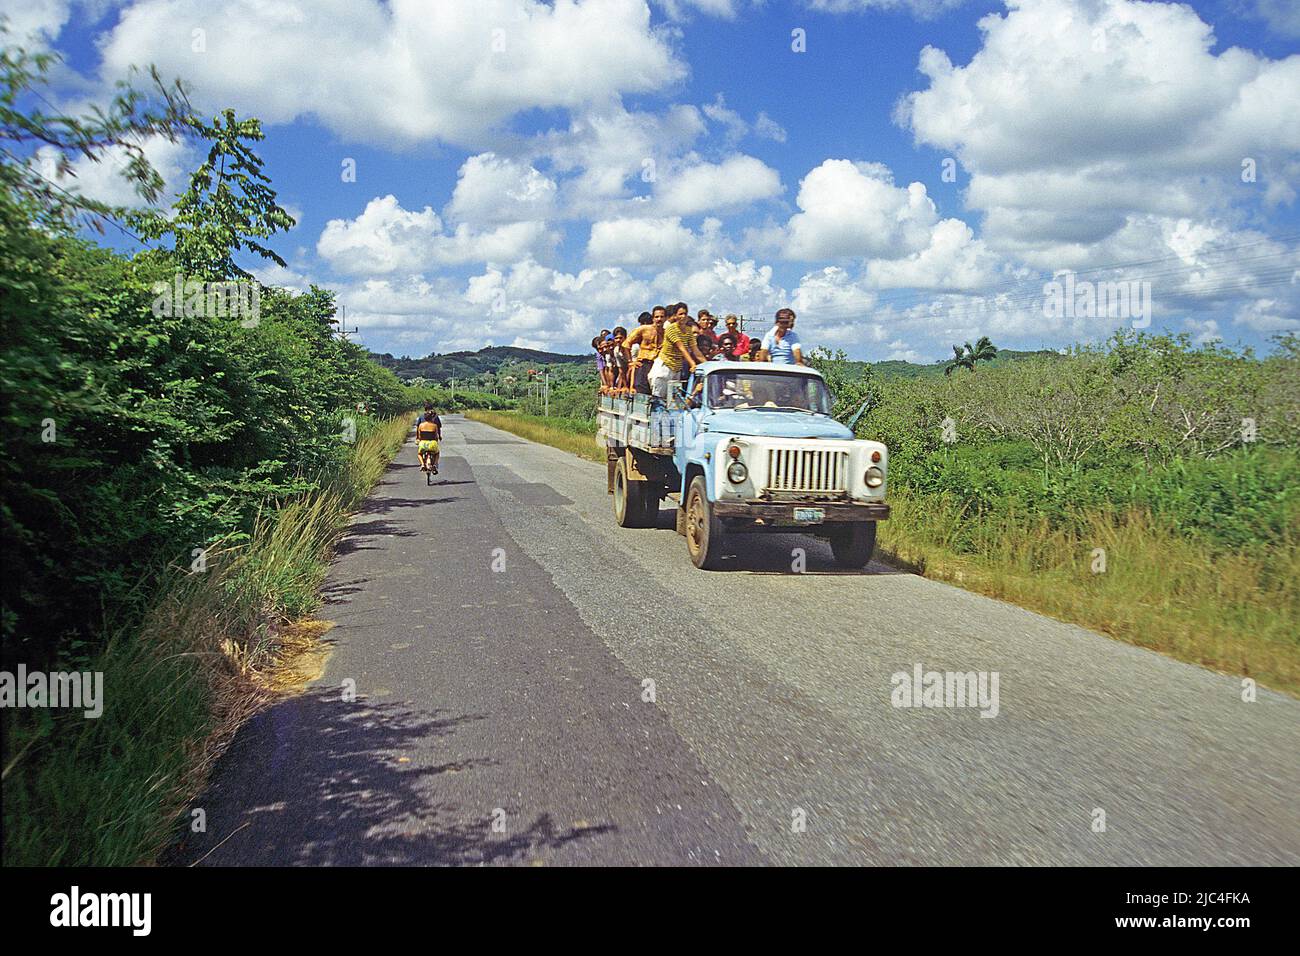 Cuban peoples on a truck, popular transportation, Isla de Juventud, Cuba, Caribbean Stock Photo